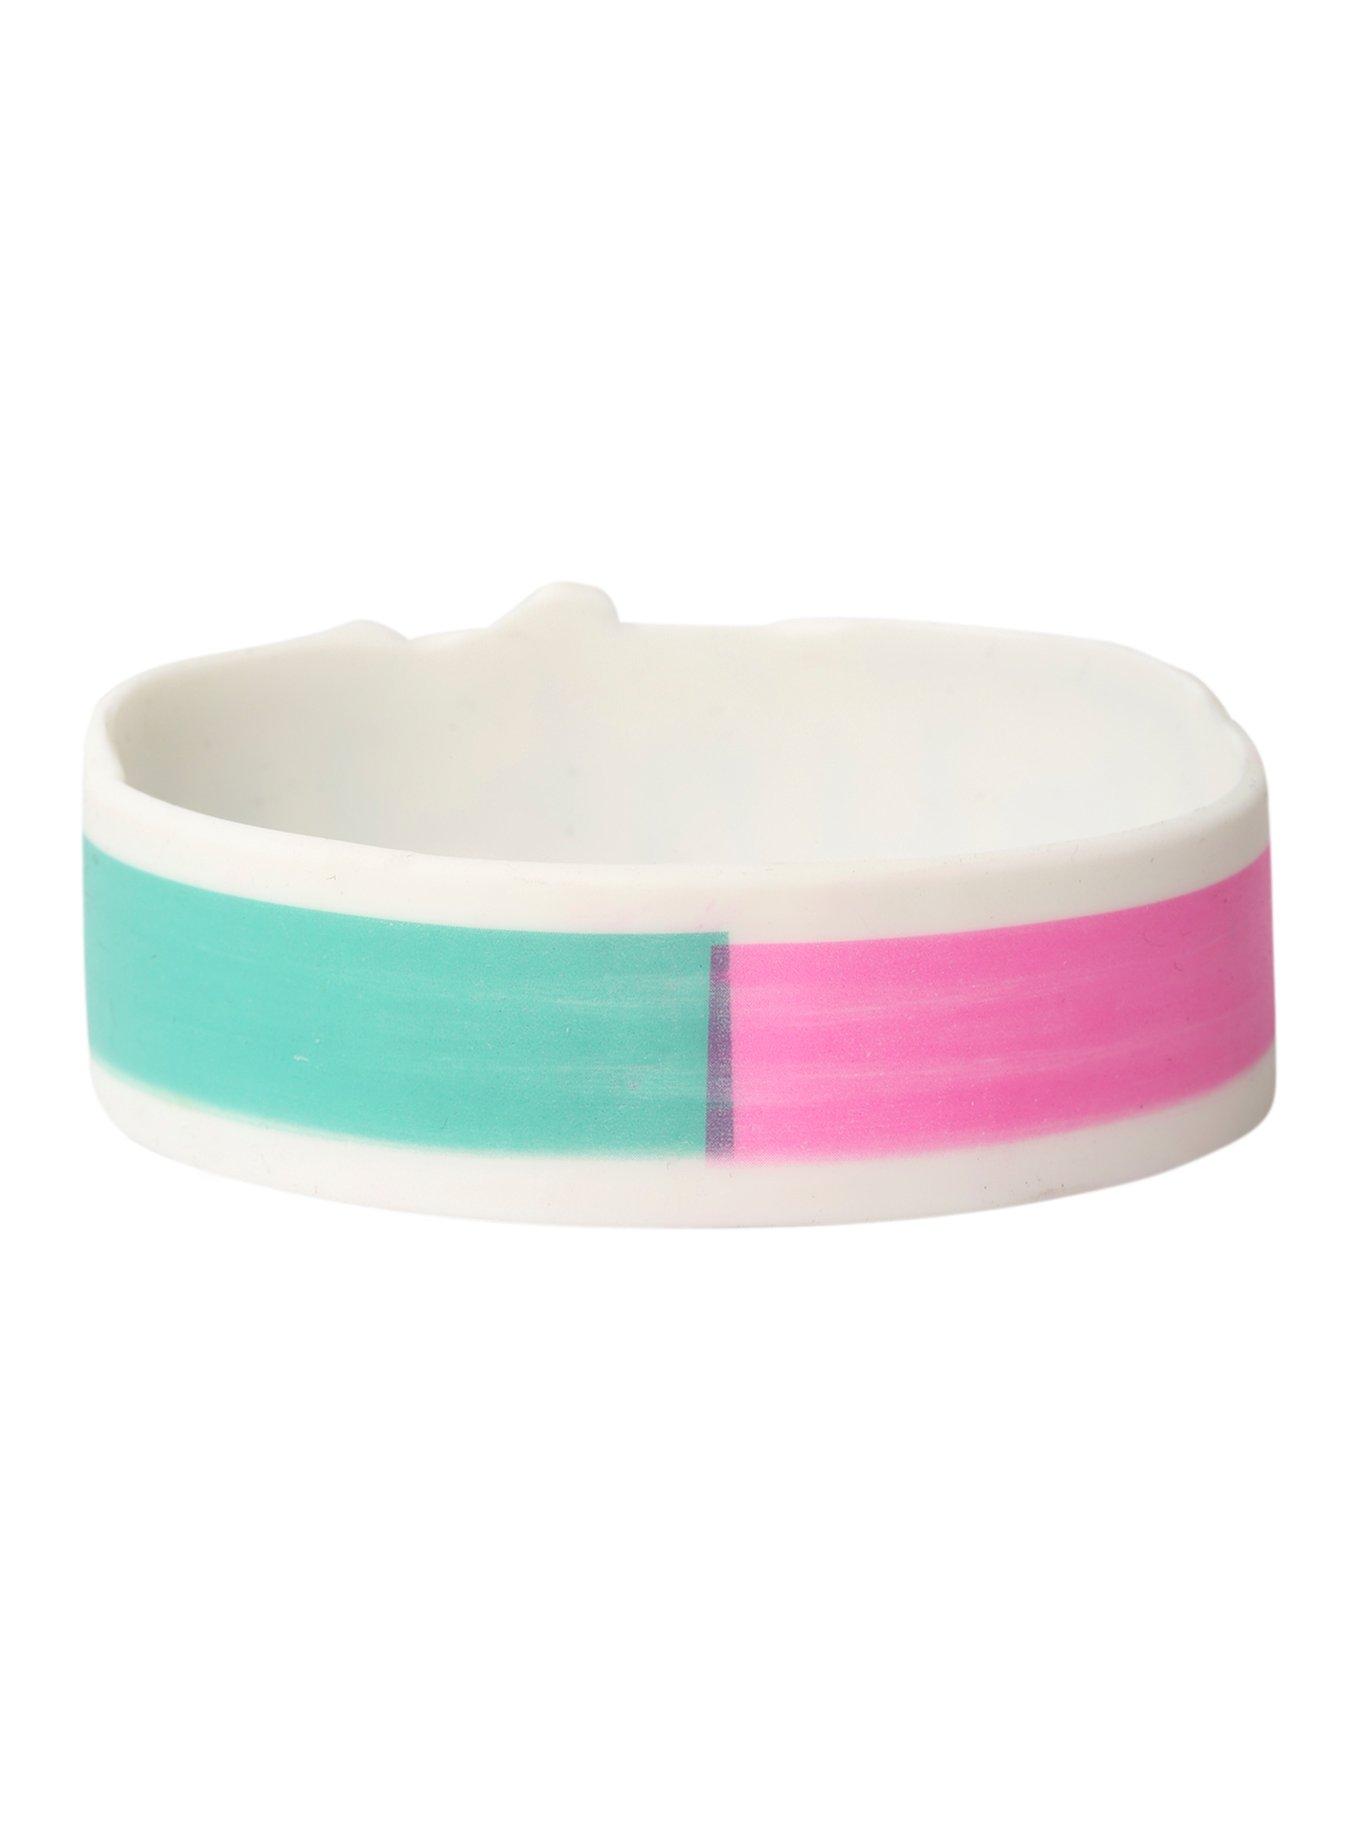 Blink-182 Pink Turquoise Die-Cut Rubber Bracelet, , alternate